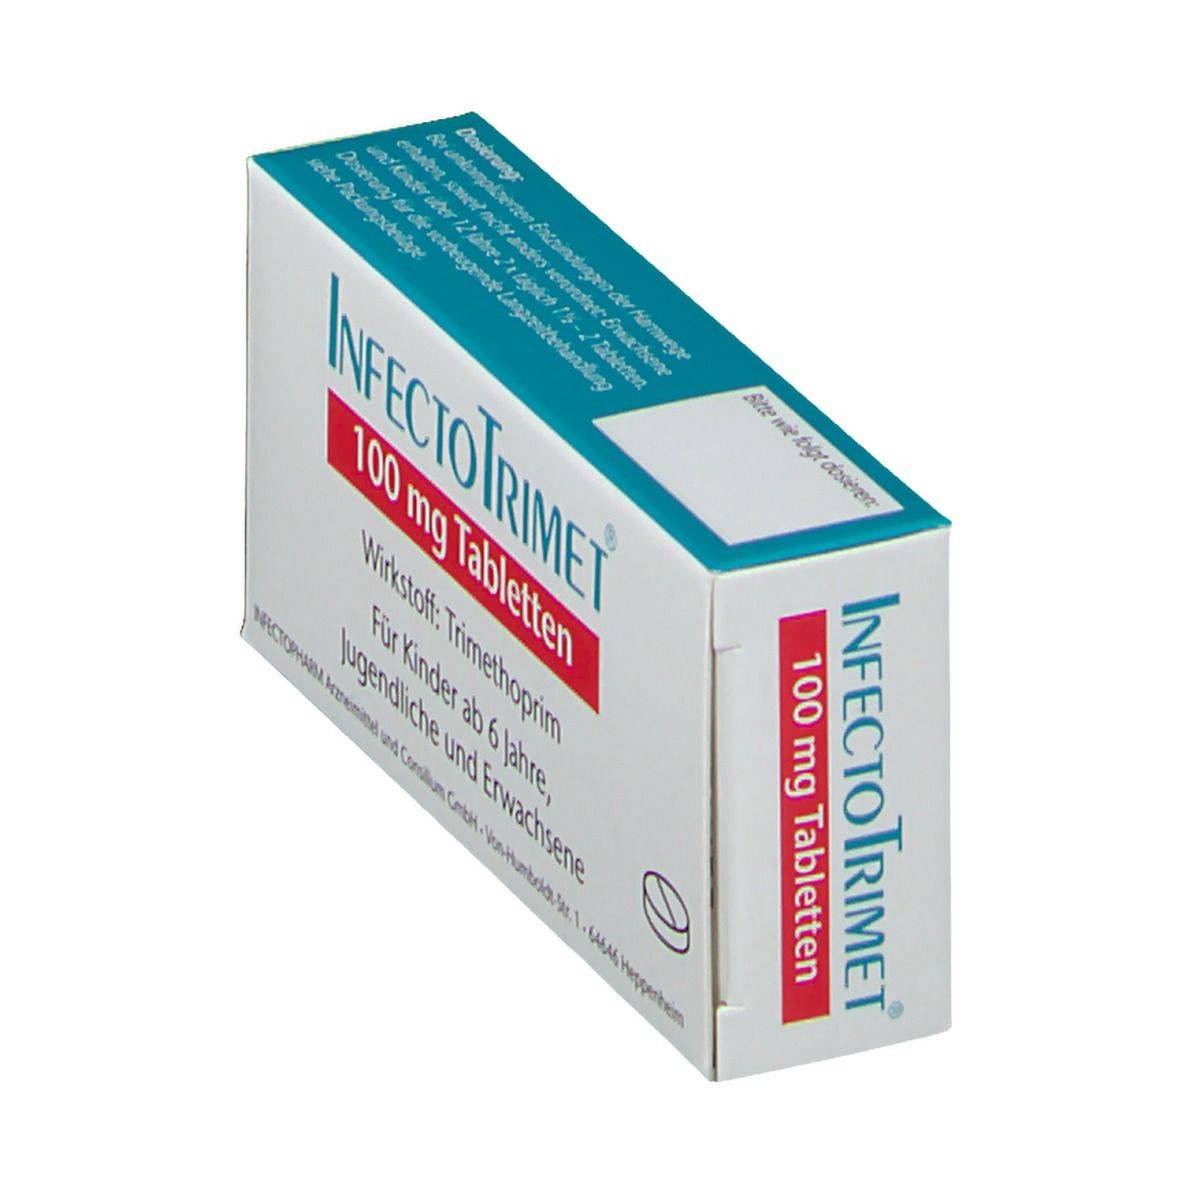 InfectoTrimet® 100 mg